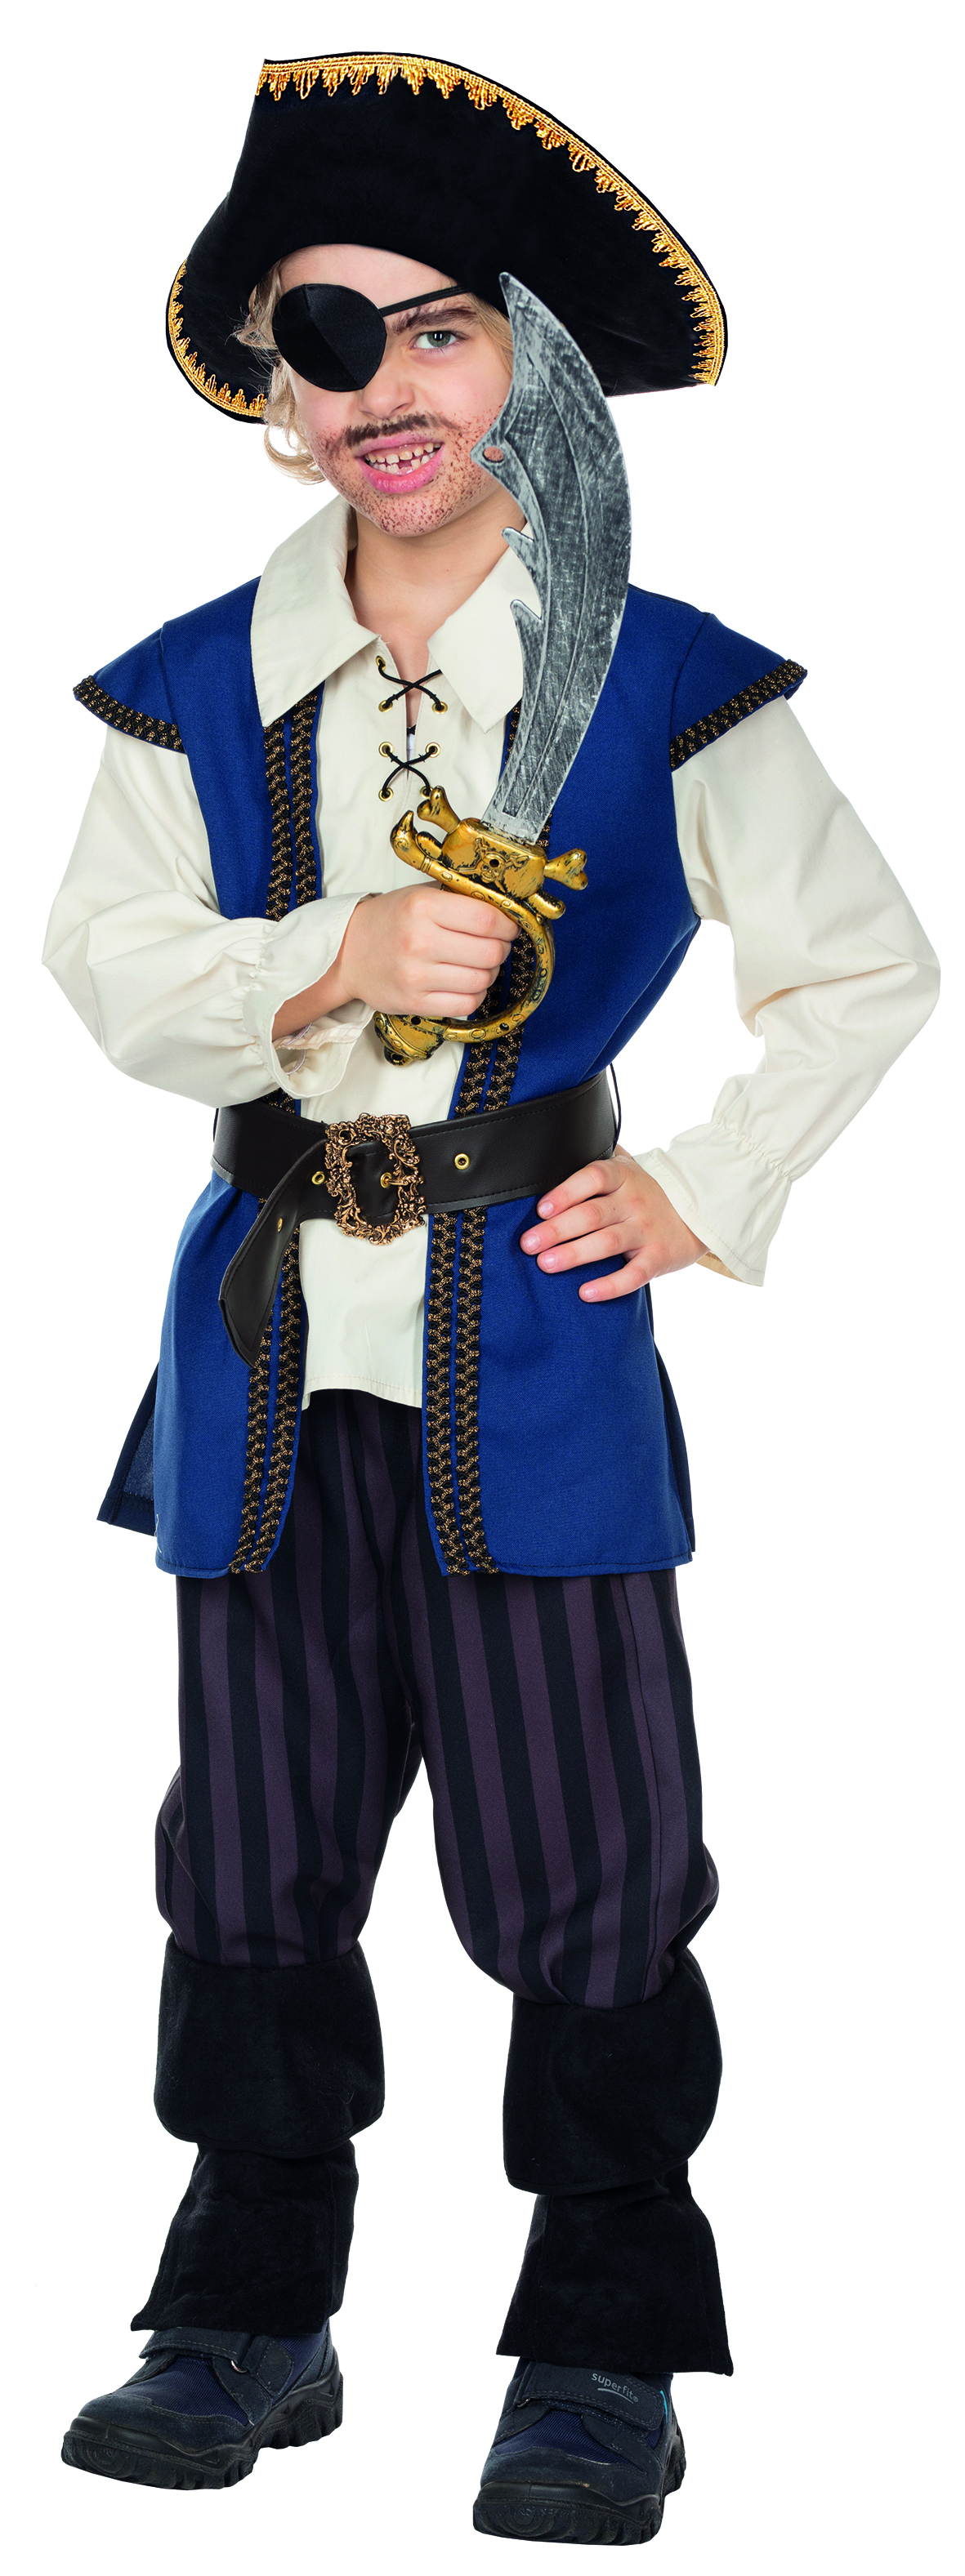 PxP 12301 - Pirat Jack, Kinder Kostüm, 3tlg. Seeräuber, Gr. 104 - 164